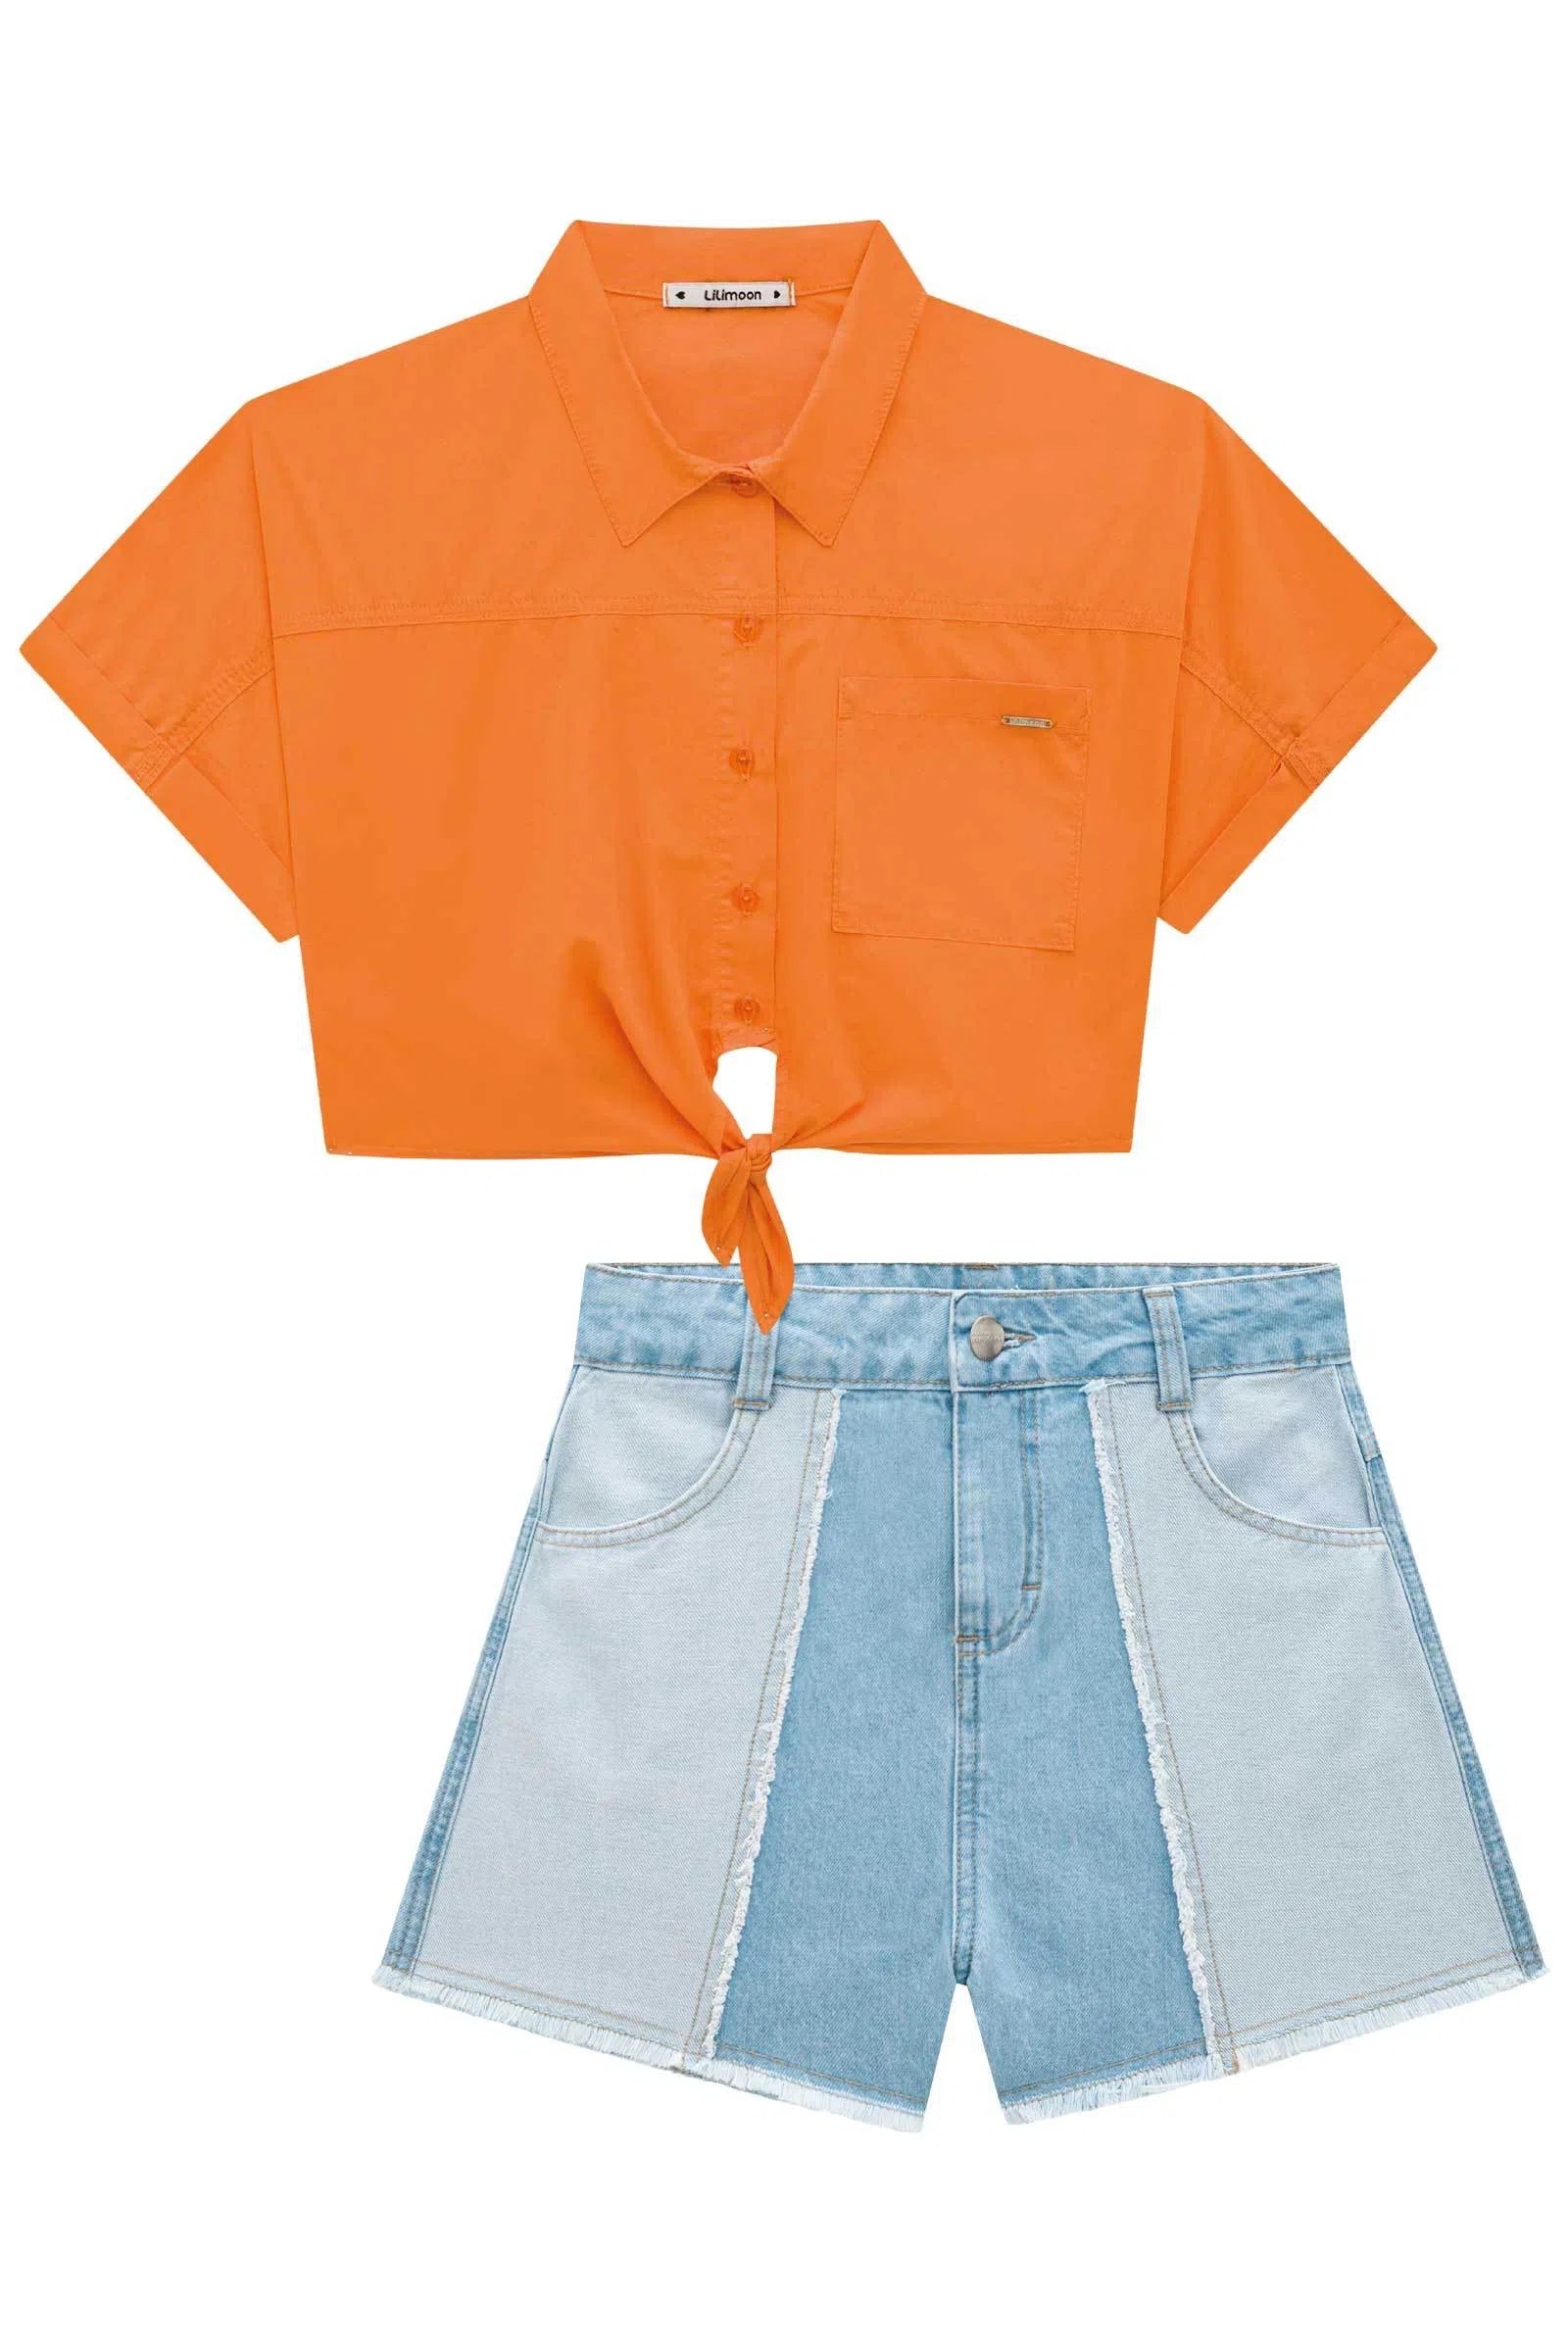 Conjunto Camisa em Tricoline e Shorts em Jeans Arkansas 73139 Lilimoon